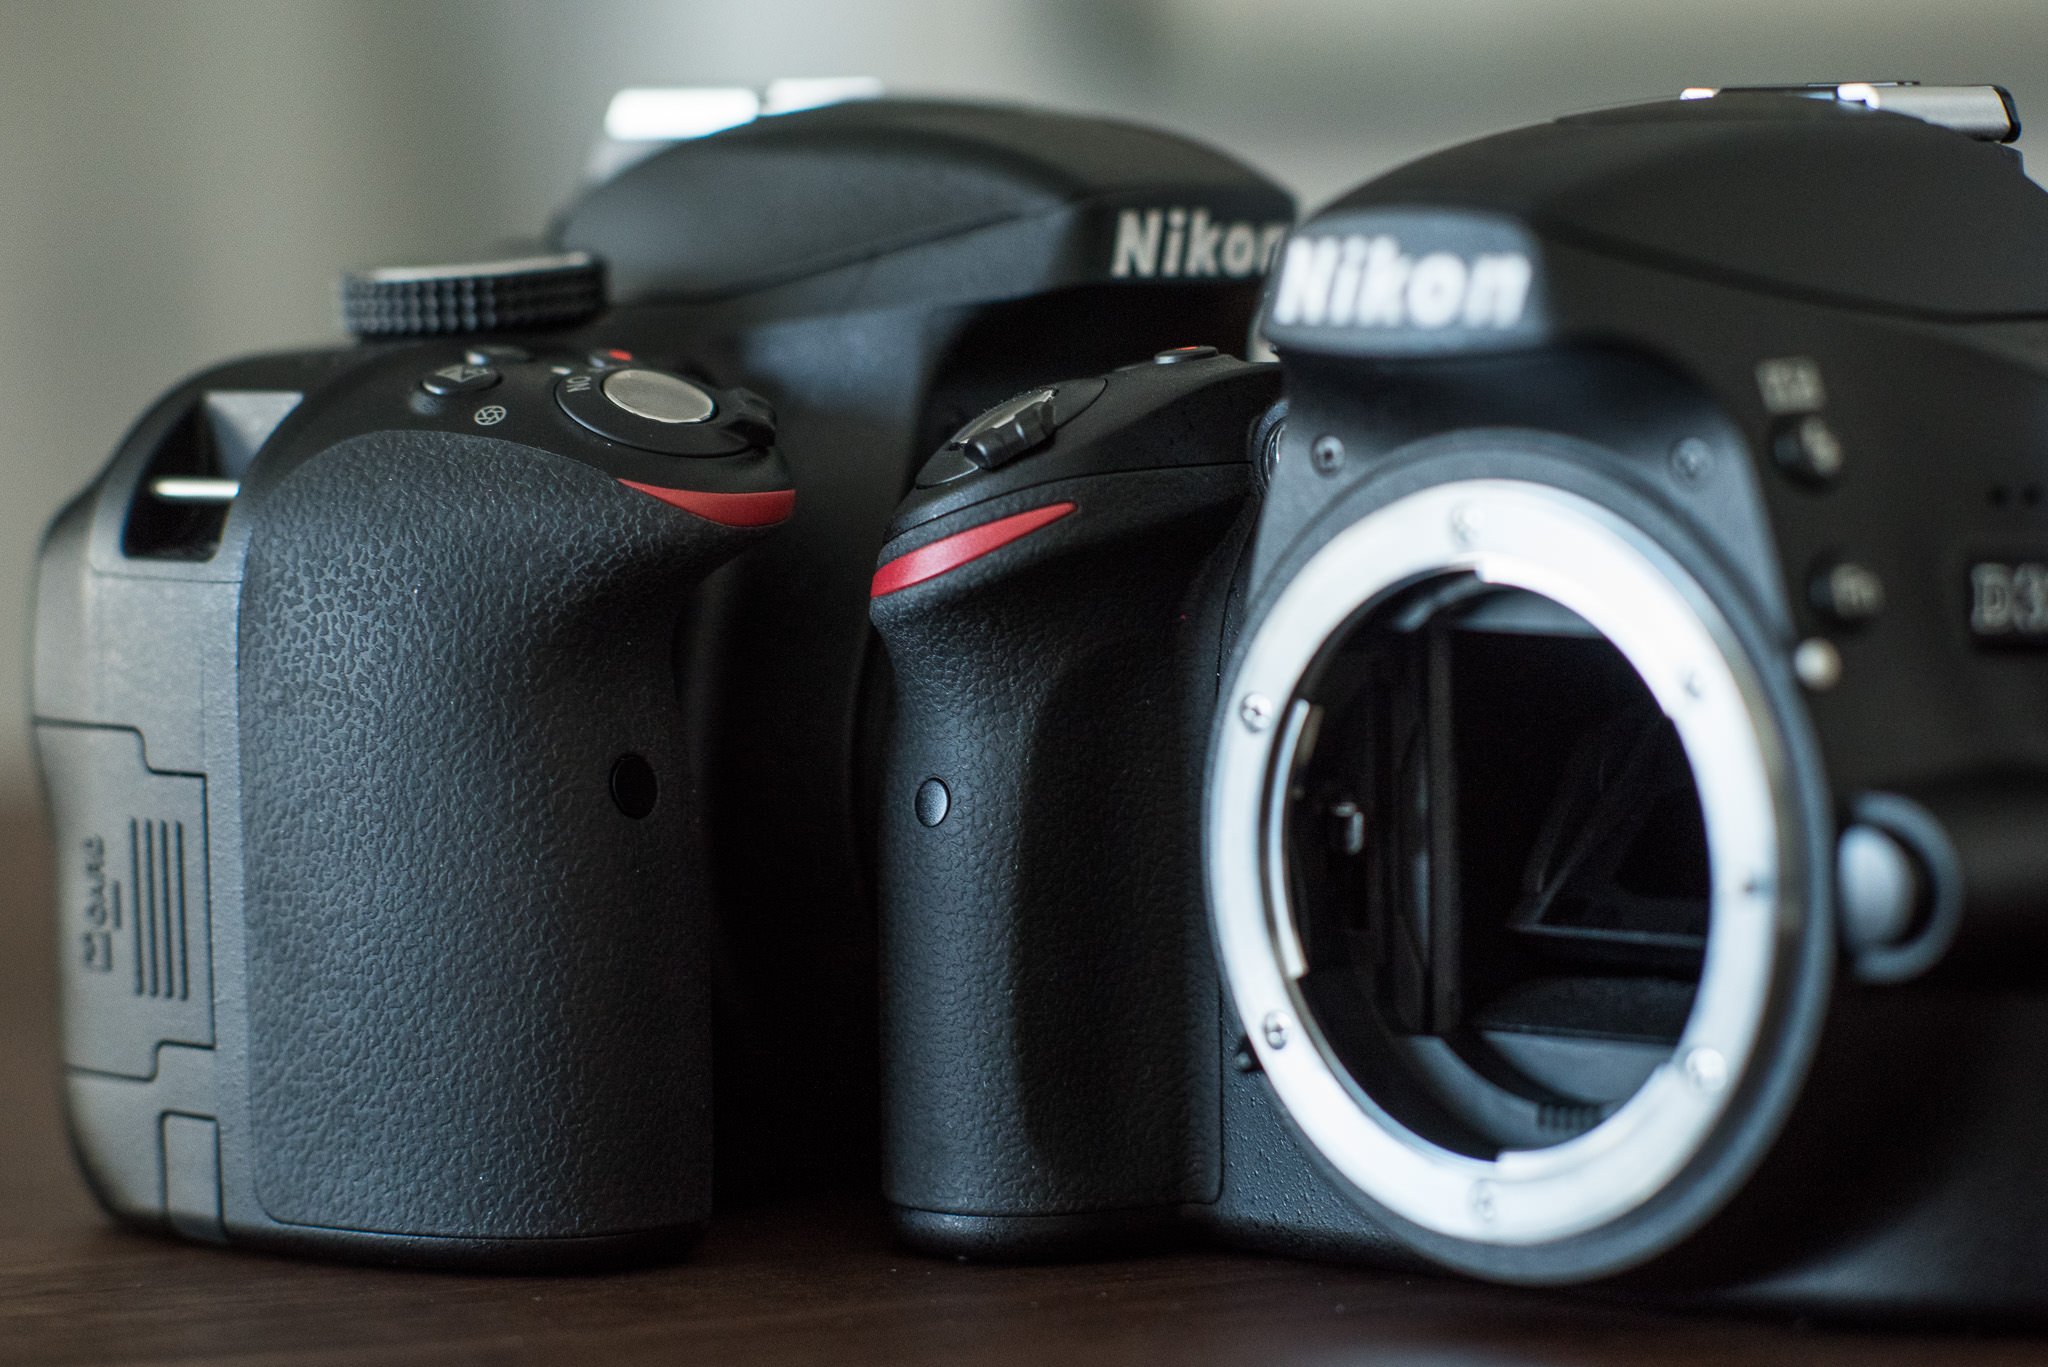 Nikon D3200 DSLR Camera Highlights & Overview 